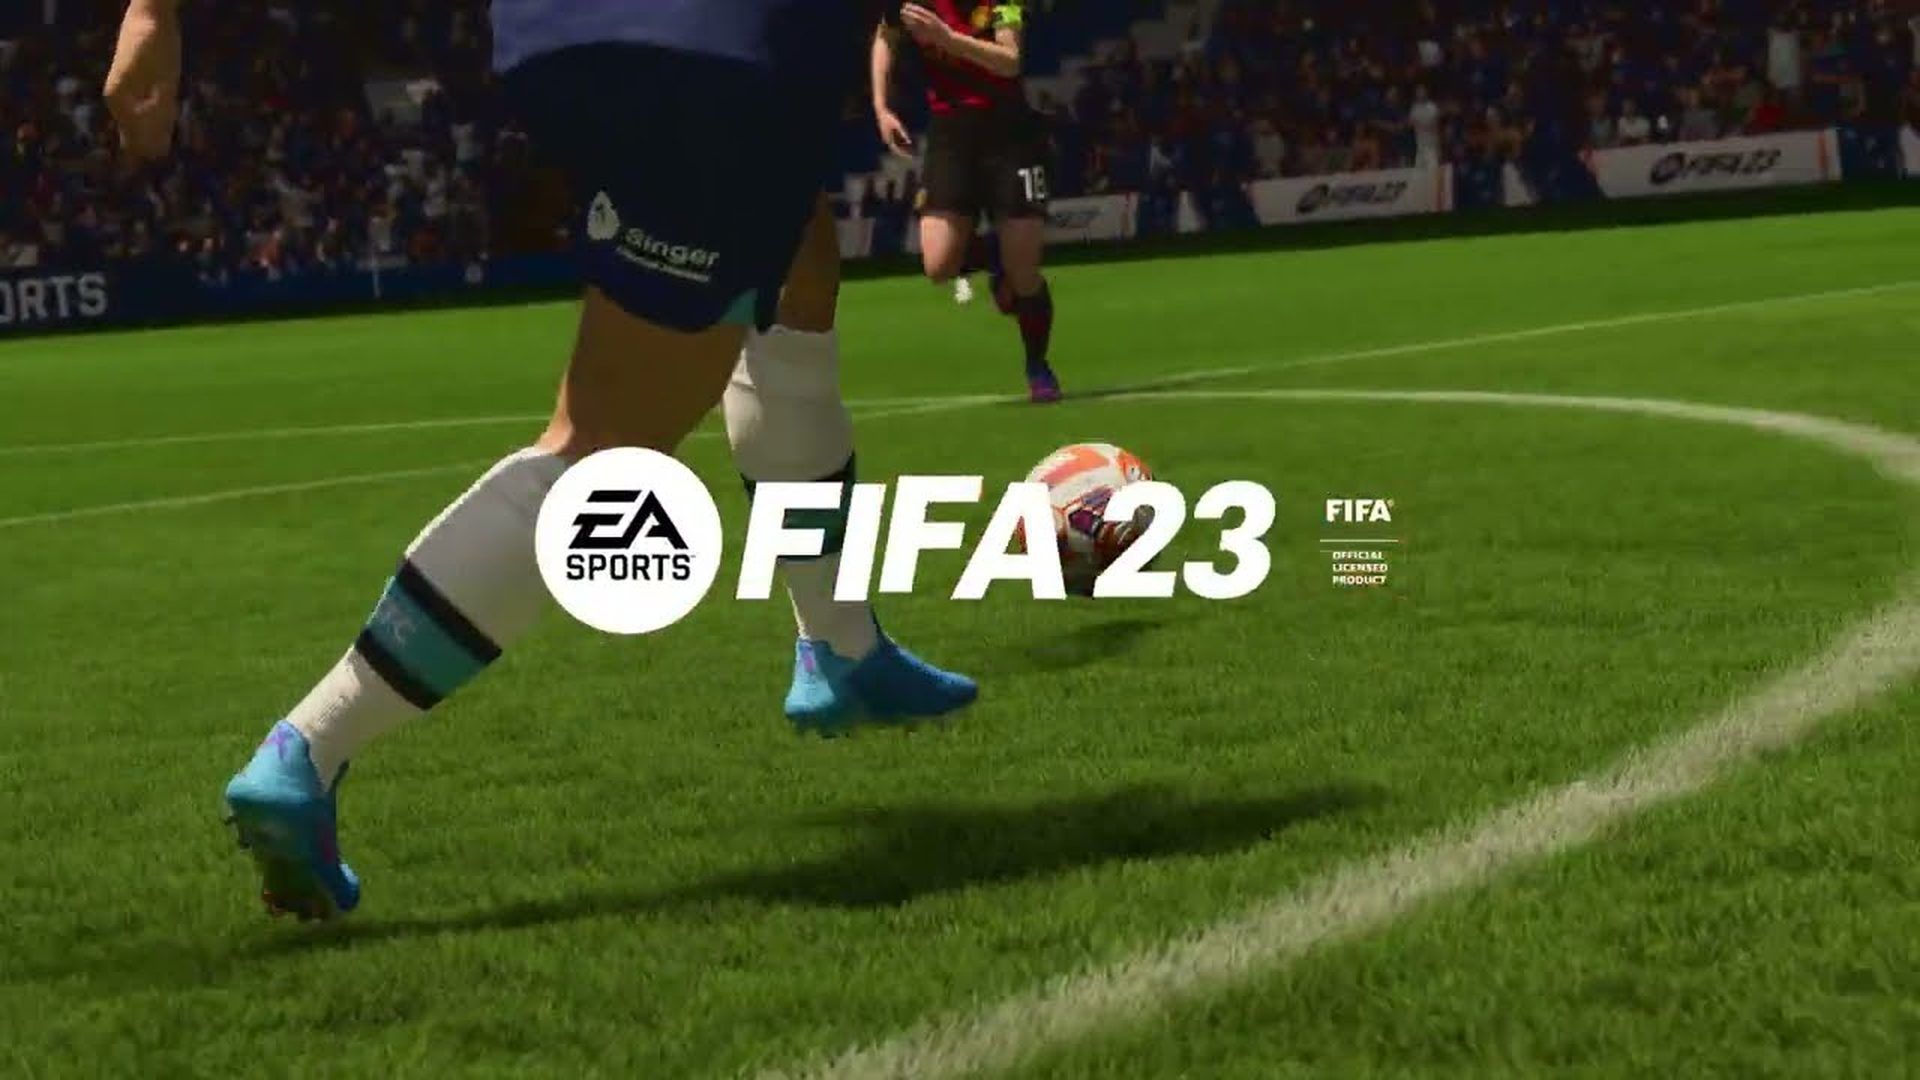 Explained: FIFA 23 compensation packs